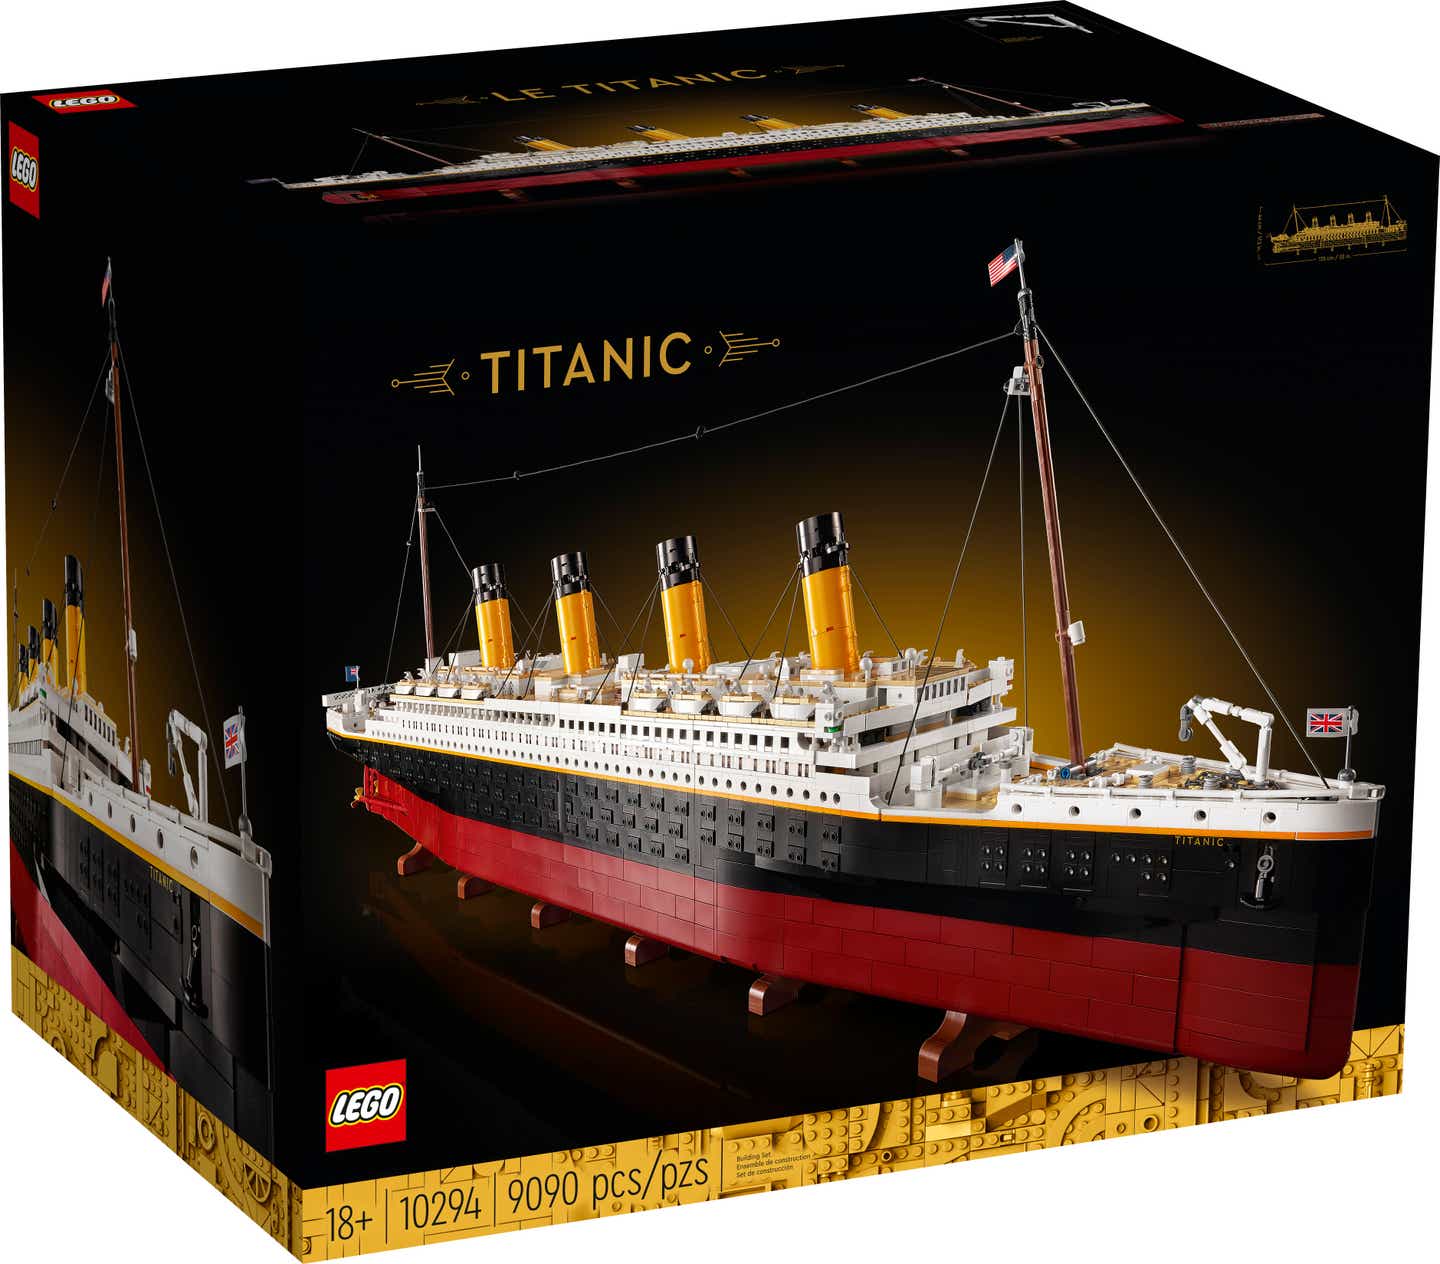 Titanic lego set in box